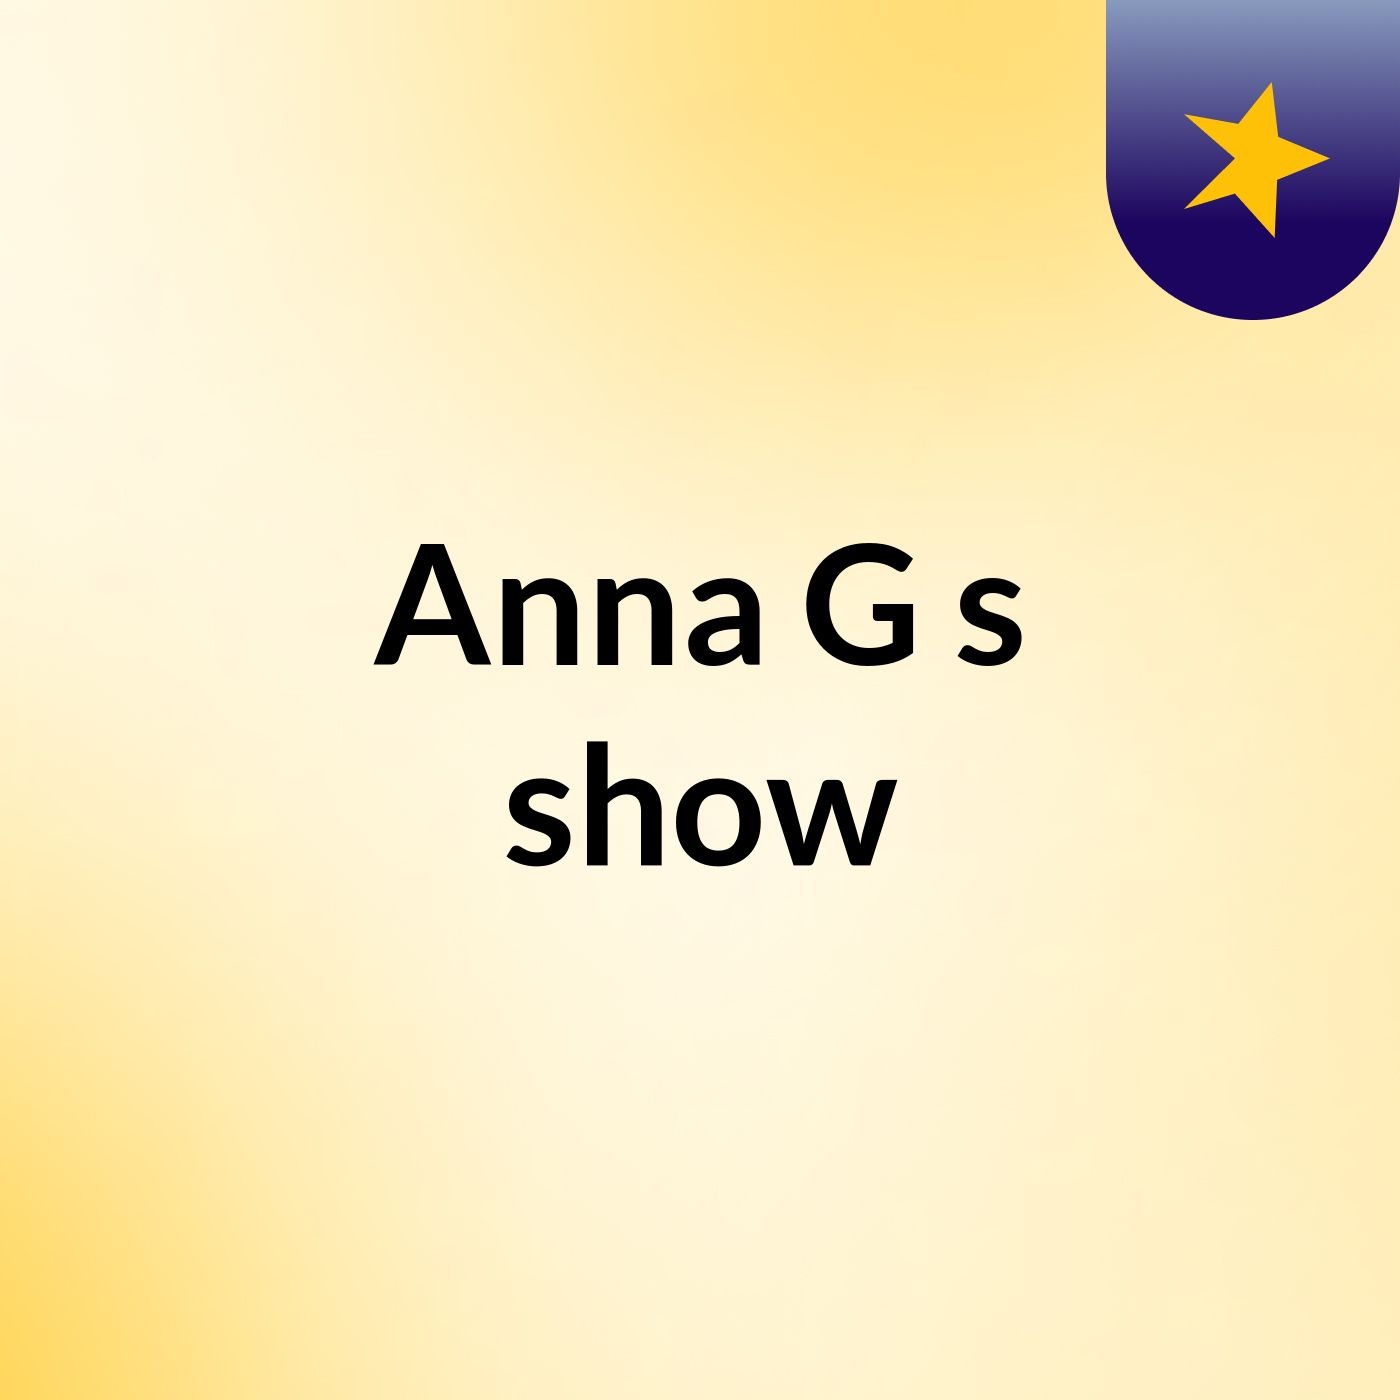 Anna G's show